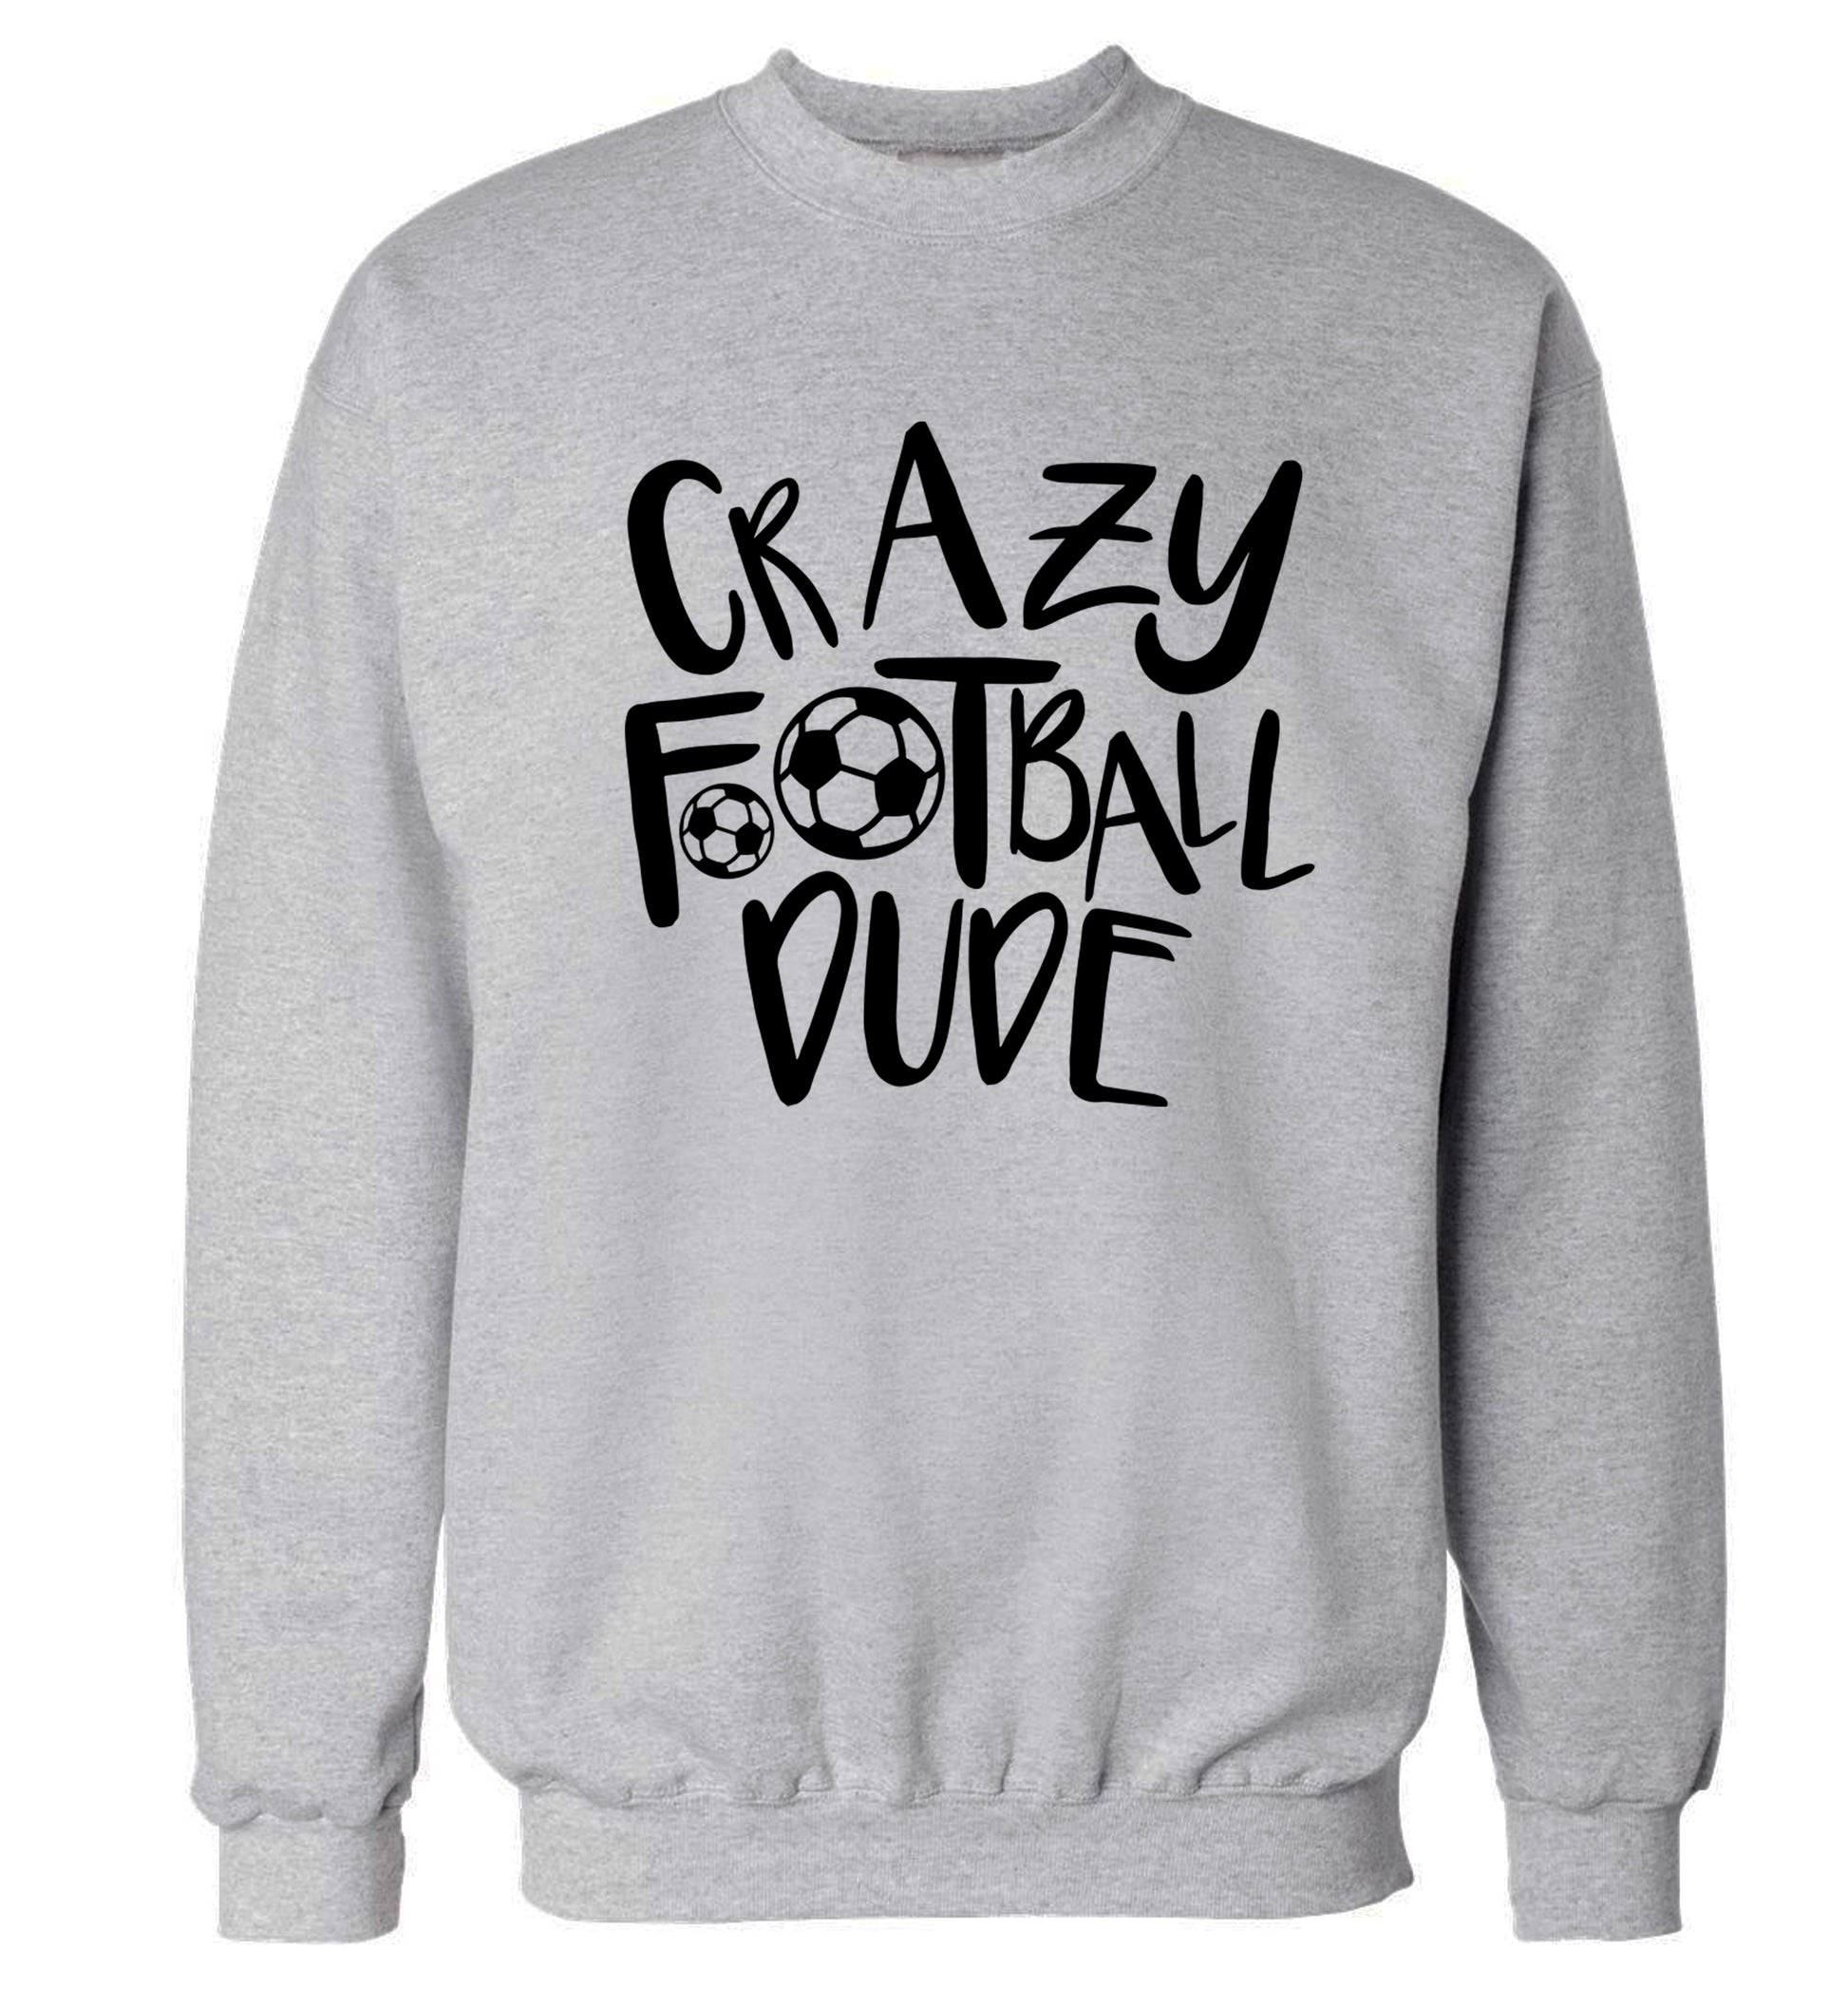 Crazy football dude Adult's unisexgrey Sweater 2XL